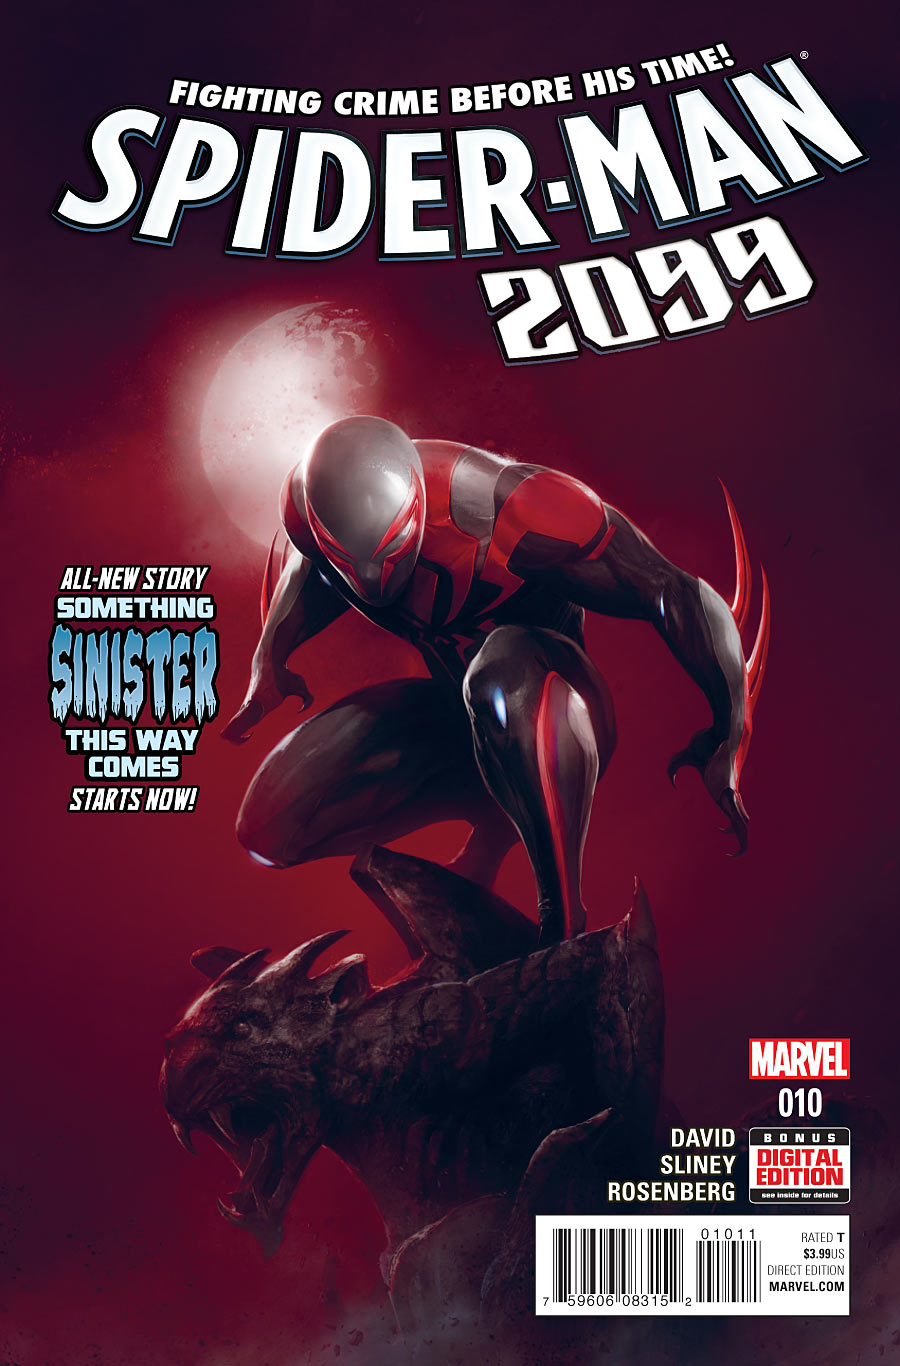 Spider-Man 2099 Vol 3 1, Marvel Database